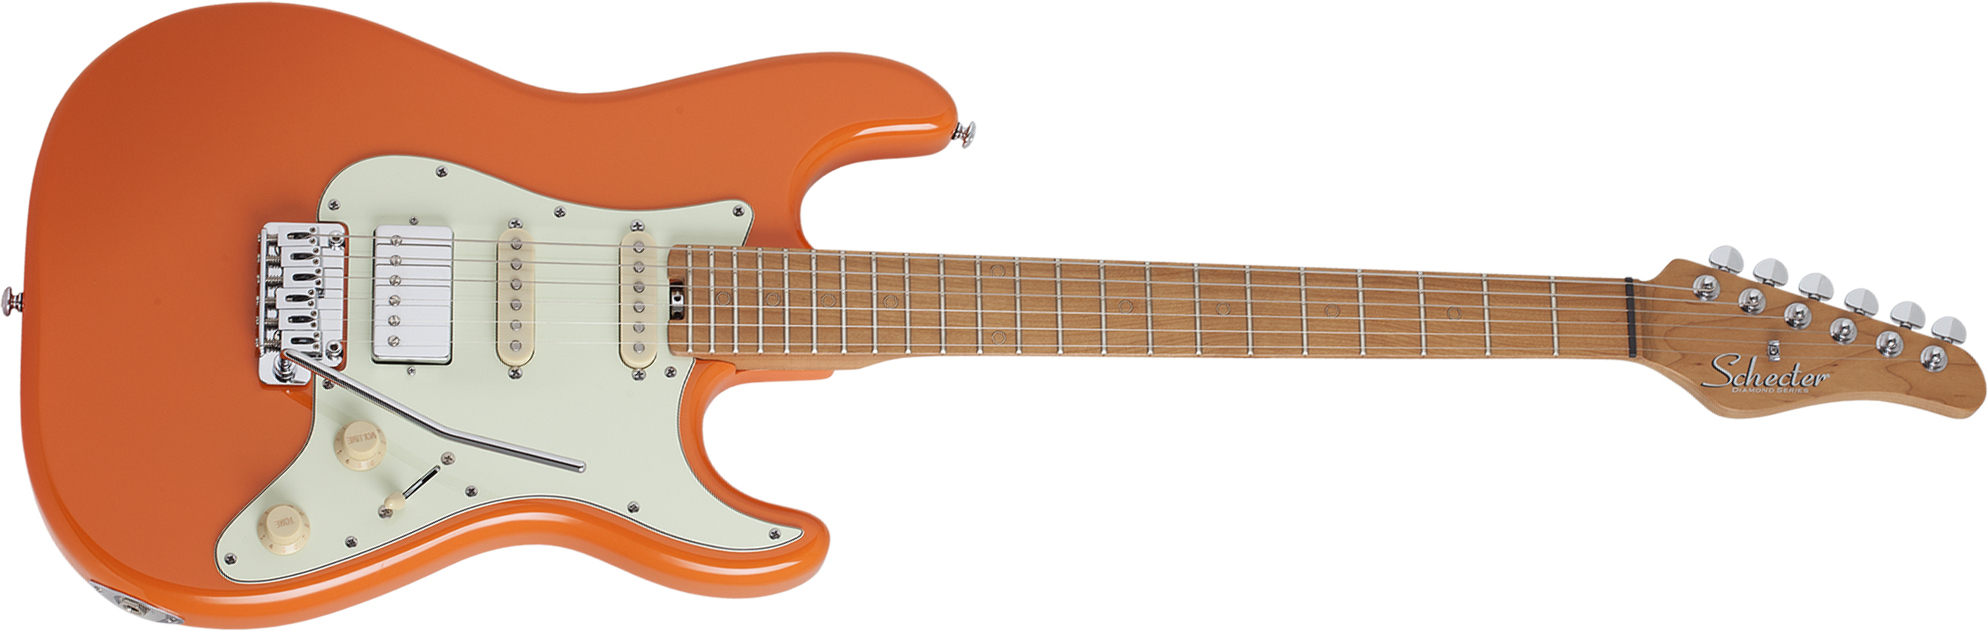 Schecter Nick Johnston Traditional Hss Signature Trem Eb - Atomic Orange - Str shape electric guitar - Main picture